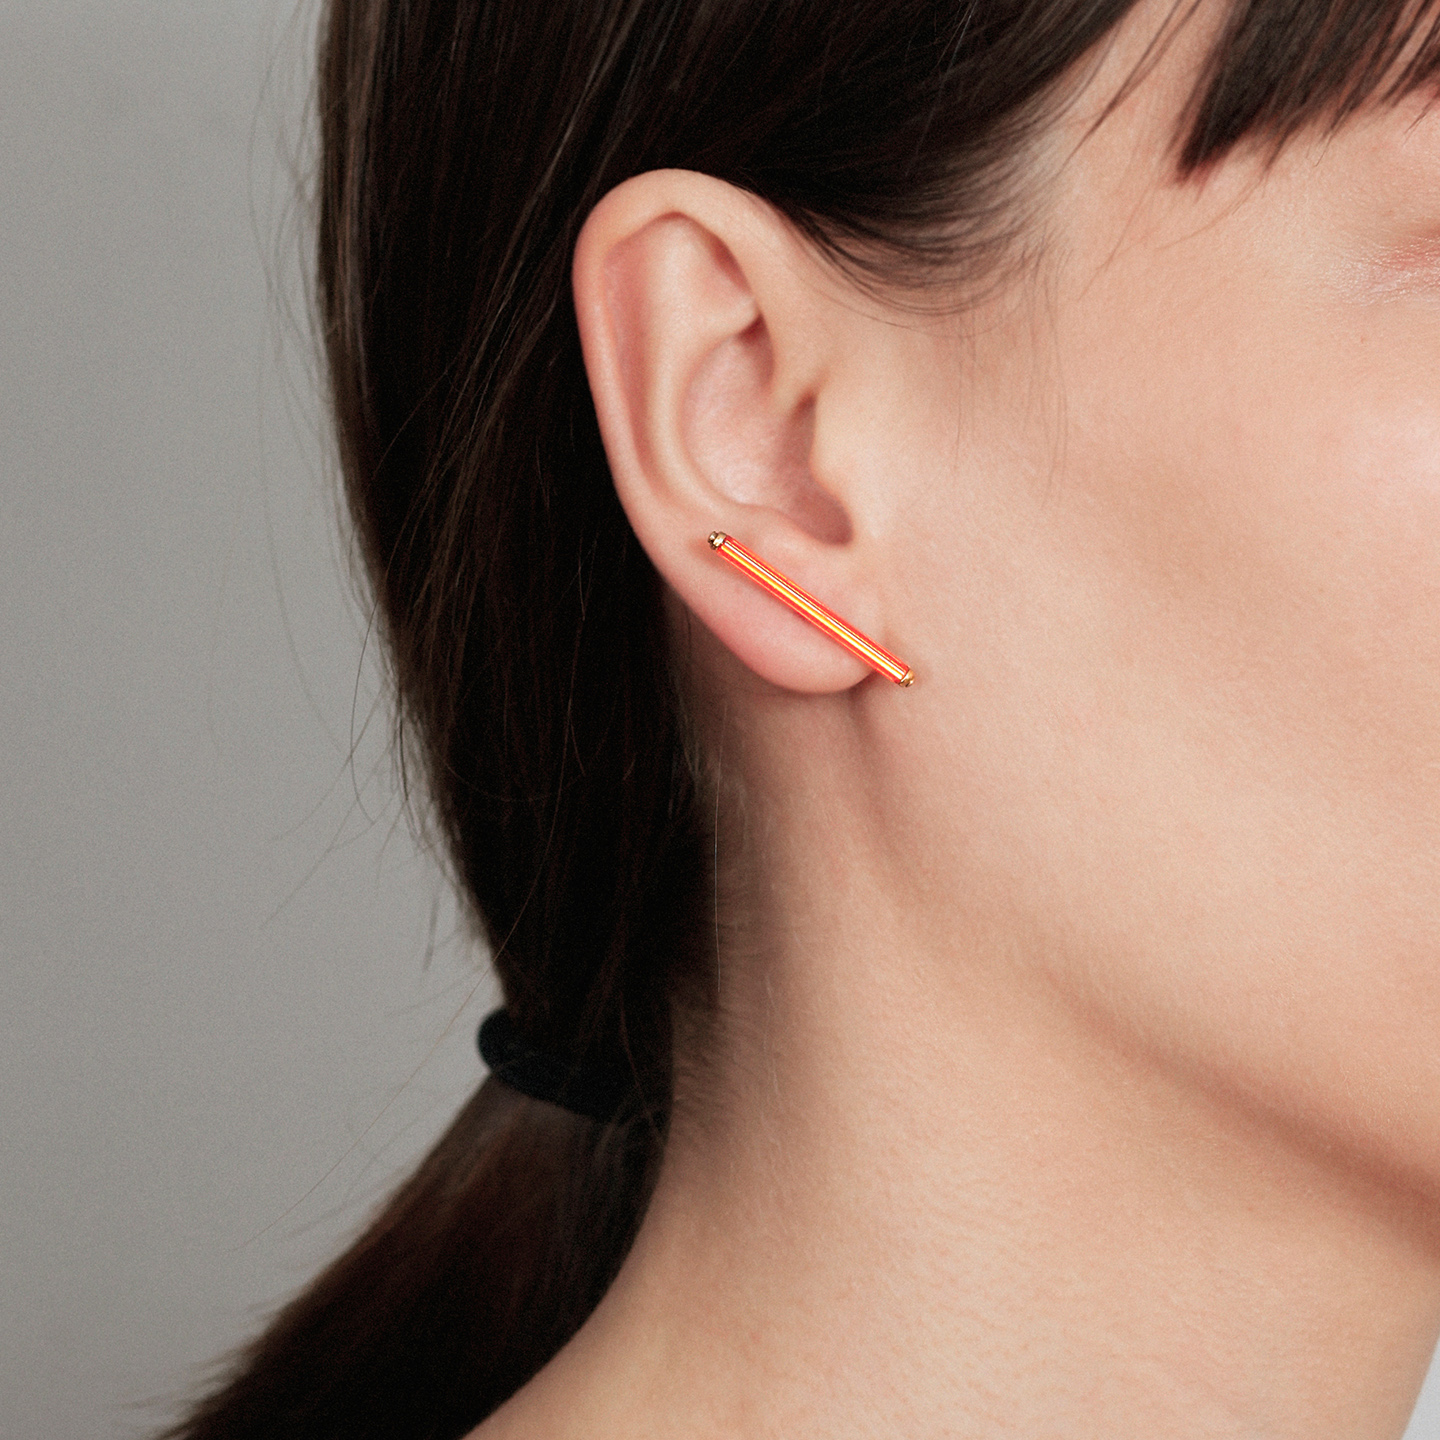 Bar minimalist earrings set with neon orange vintage glass